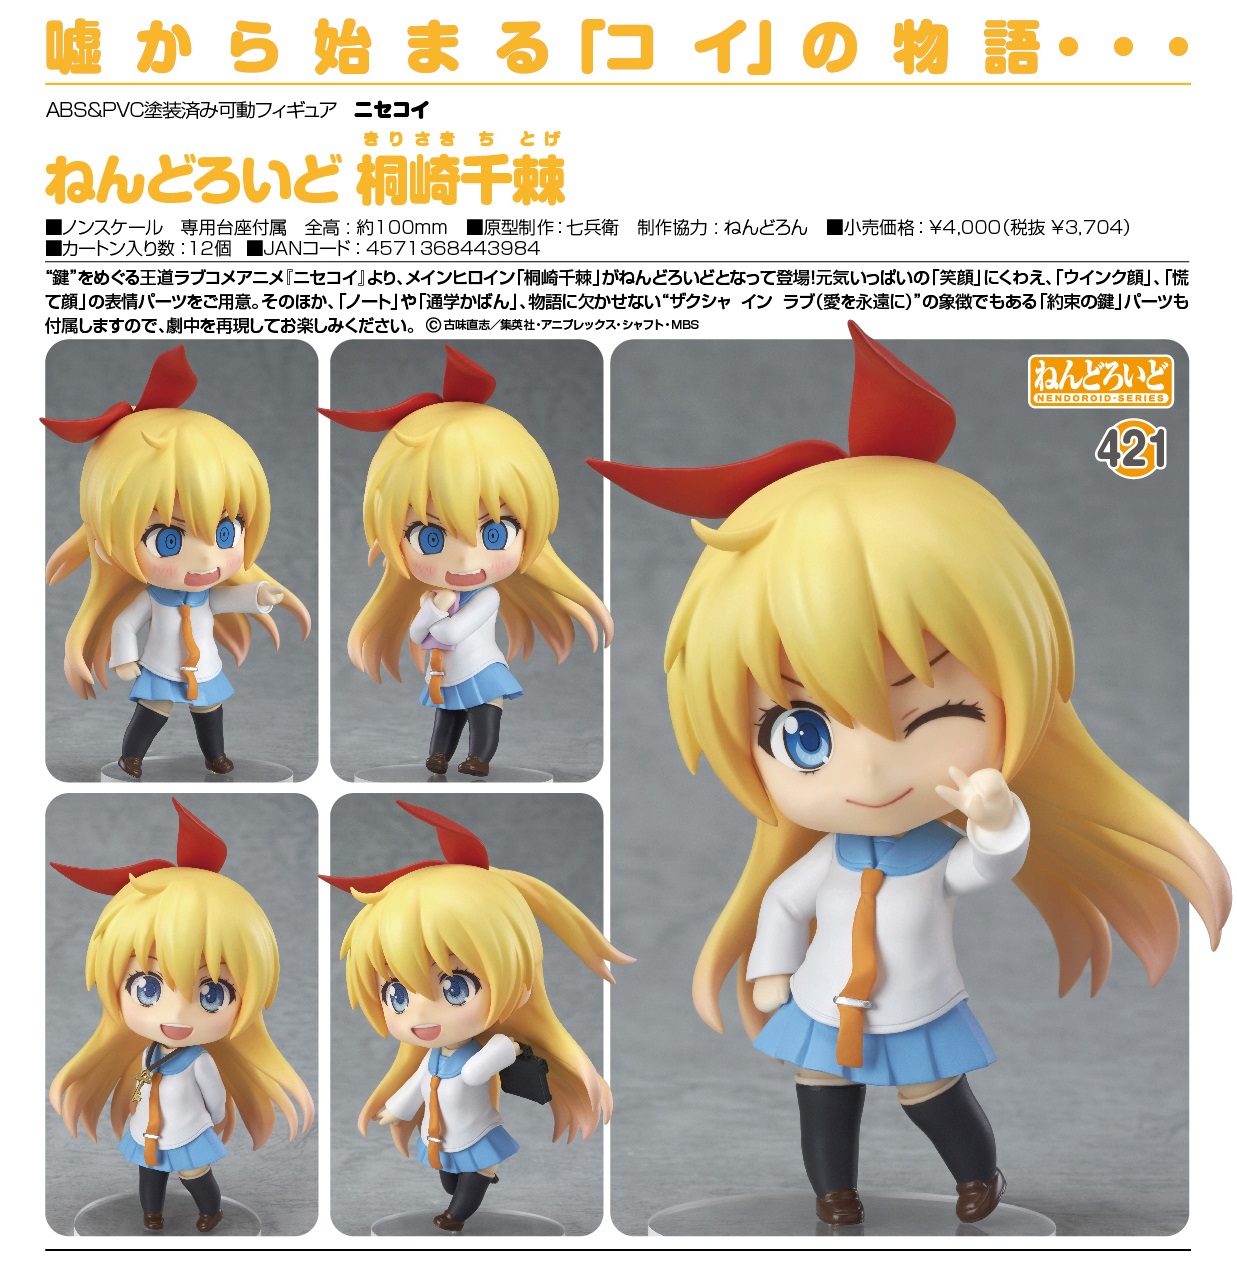 GOODSMILE 2014年8發售: Nendoroid 桐崎千棘 4,000Yen連稅 | Taghobby.com